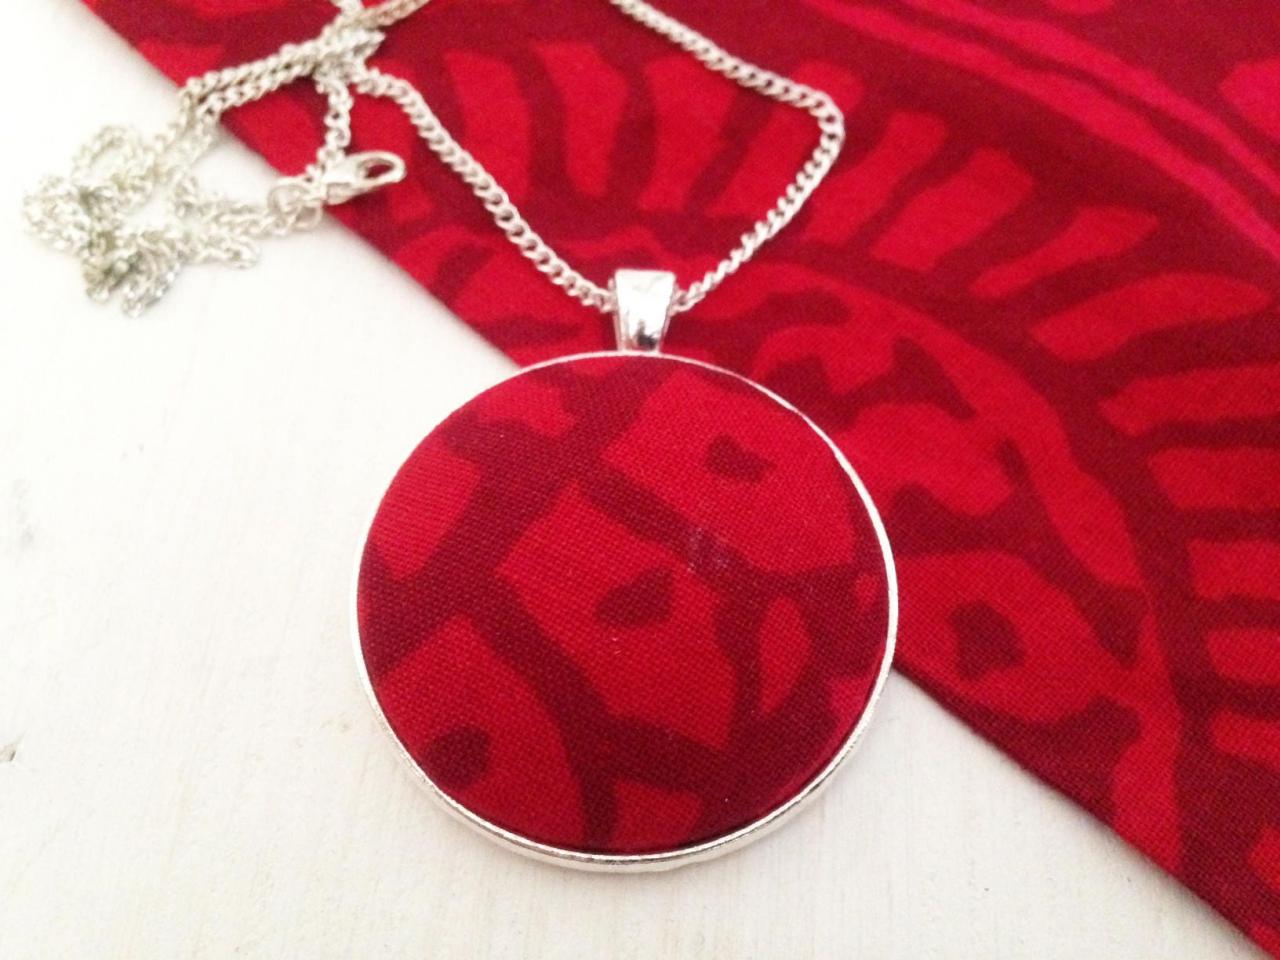 Scandinavian Silver Tone Pendant With Red Repurposed Marimekko Cotton Fabric, Selma Dreams